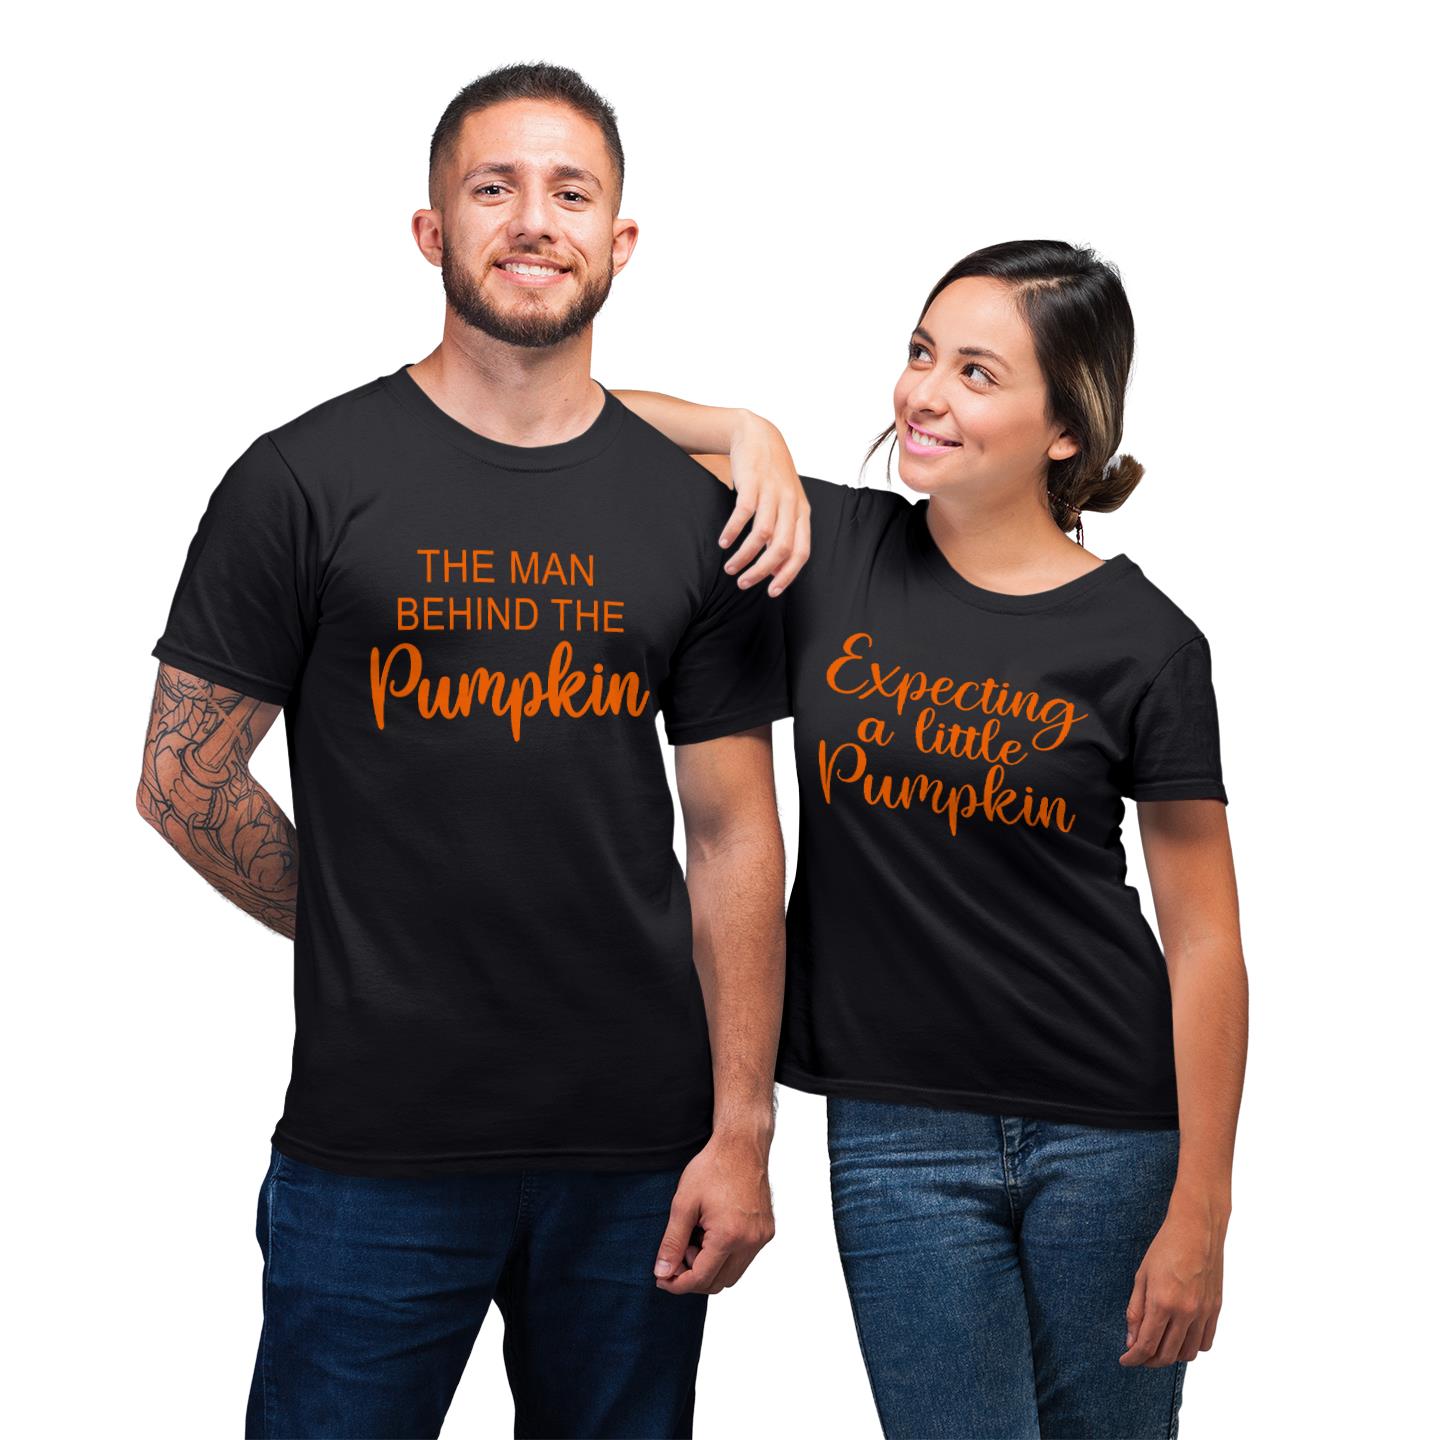 The Man Behind The Pumpkin Matching Expecting A Little Pumpkin Funny Couple Gift T-shirt